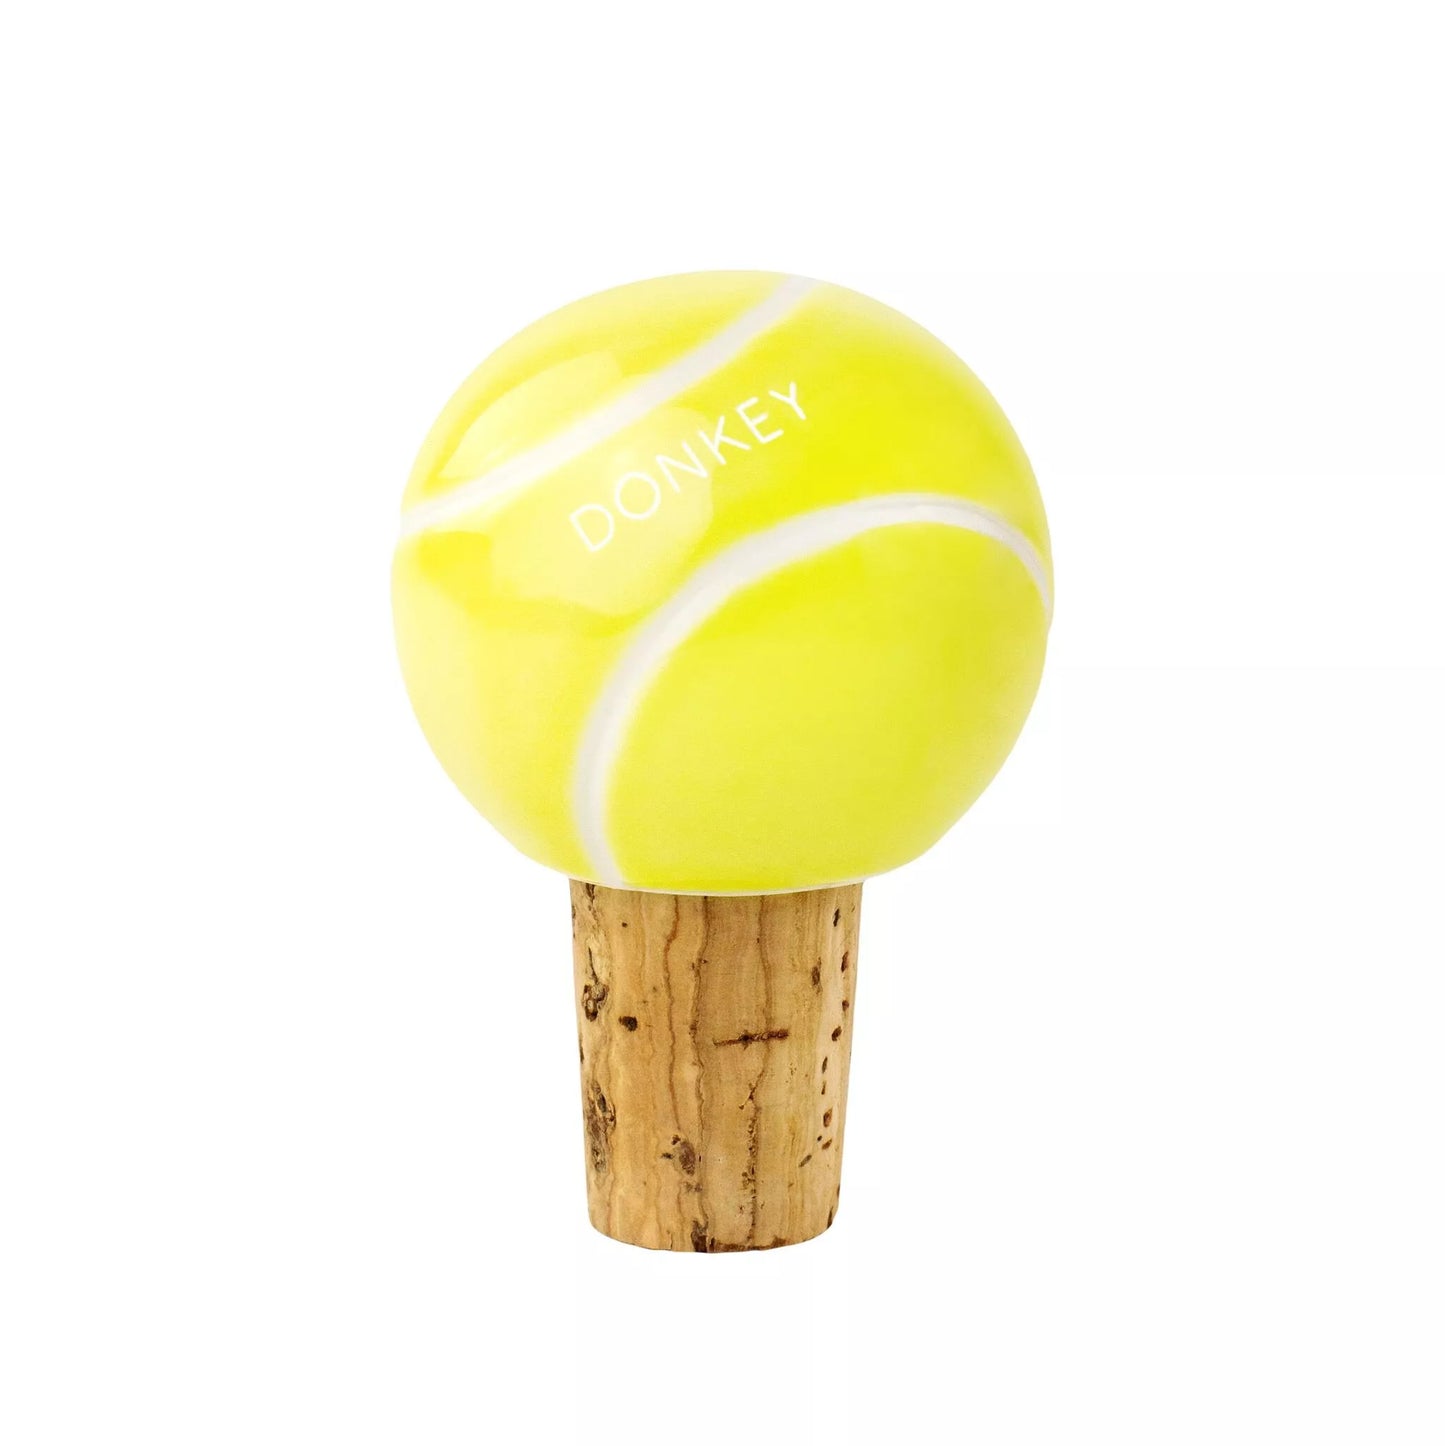 Bottle sealer - tennis ball | Donkey Products